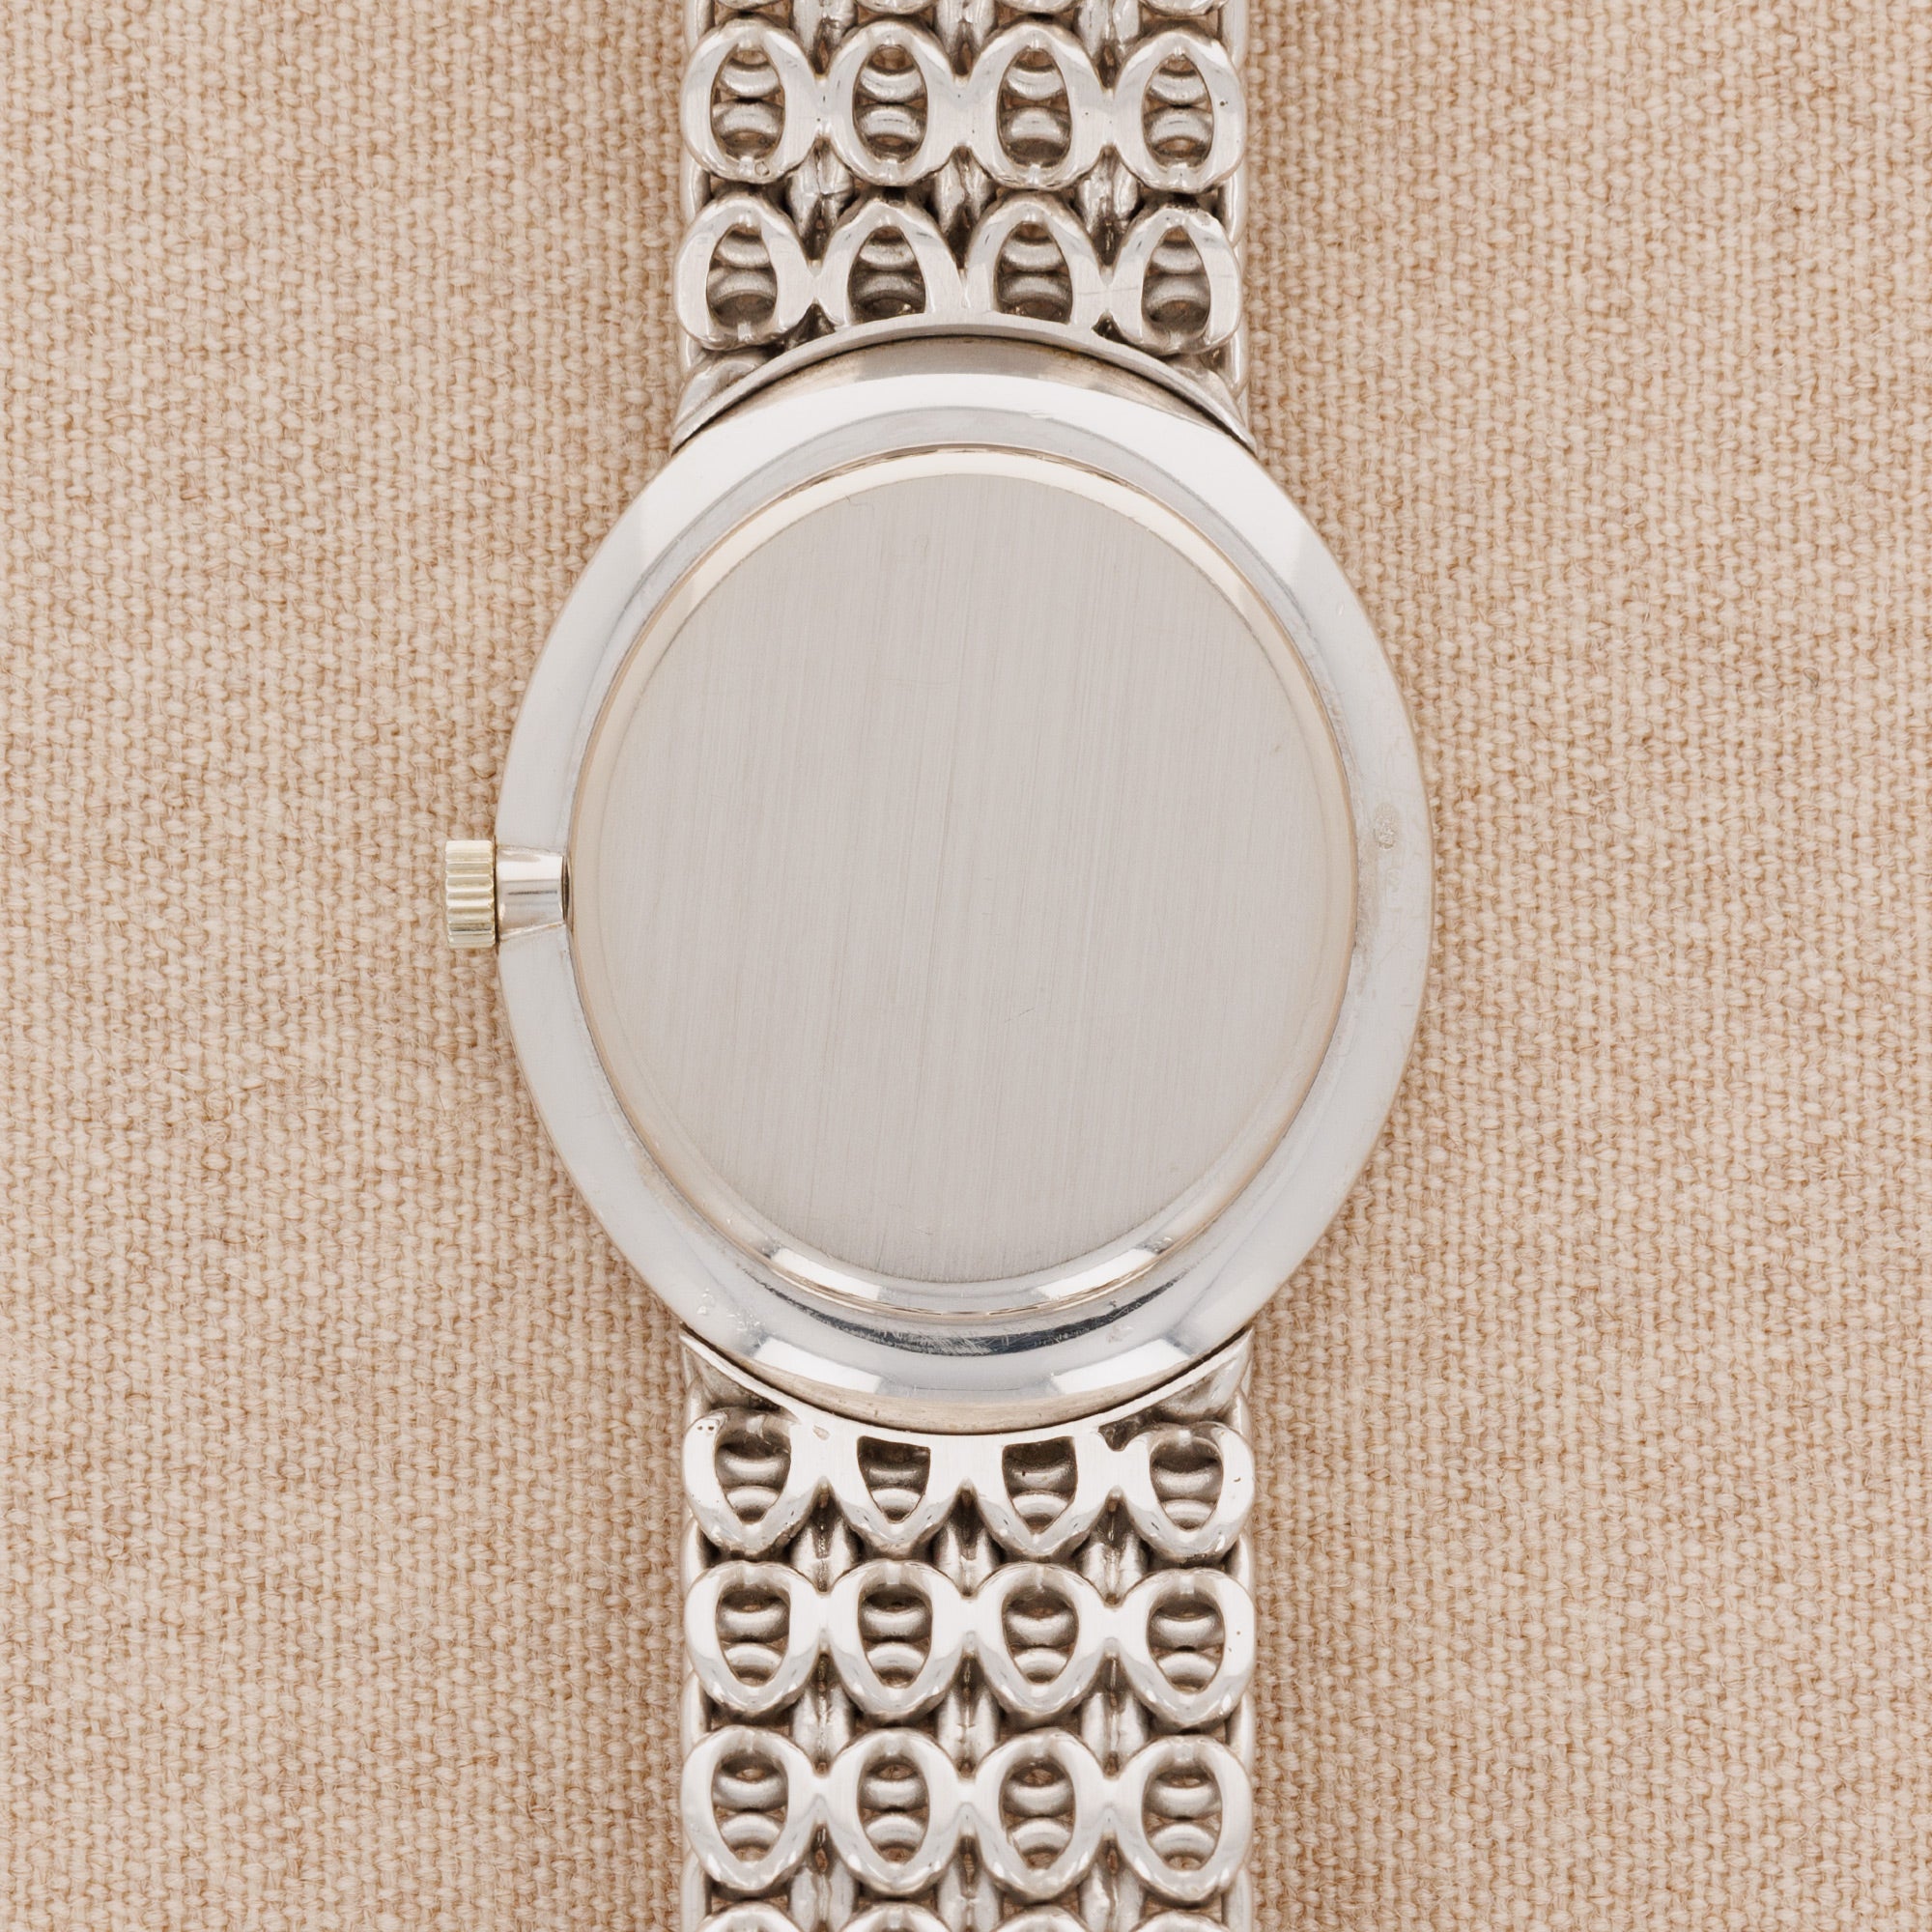 Patek Philippe - Patek Philippe White Gold Bracelet Watch Ref. 3598 - The Keystone Watches